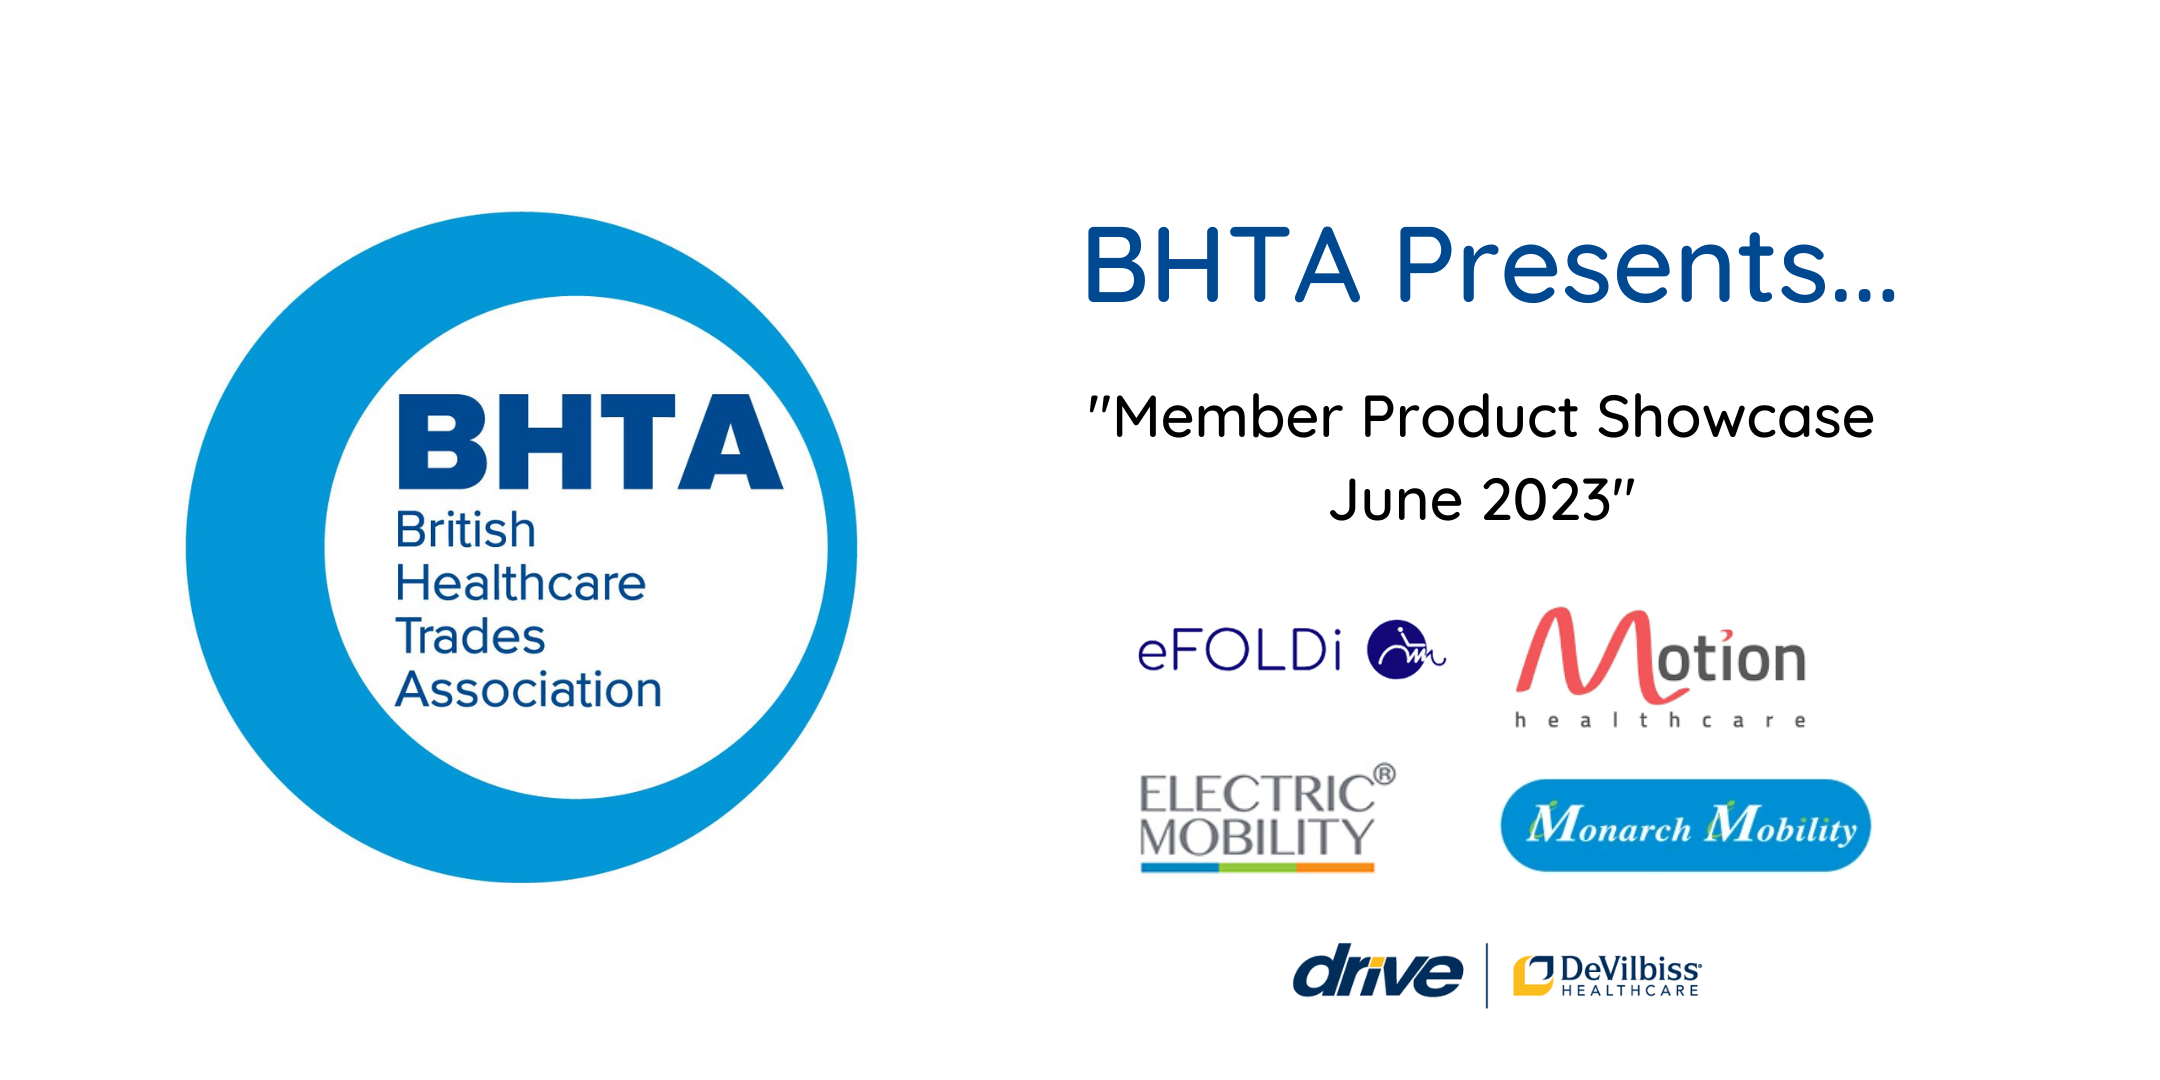 BHTA presents… “Member Product Showcase June 2023”